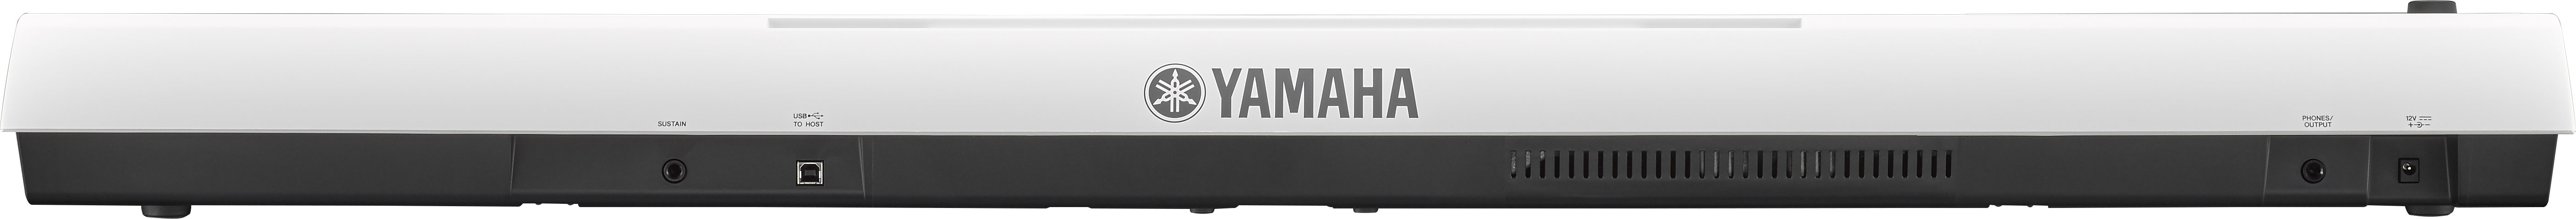 Yamaha Np-32 - White - Draagbaar digitale piano - Variation 1